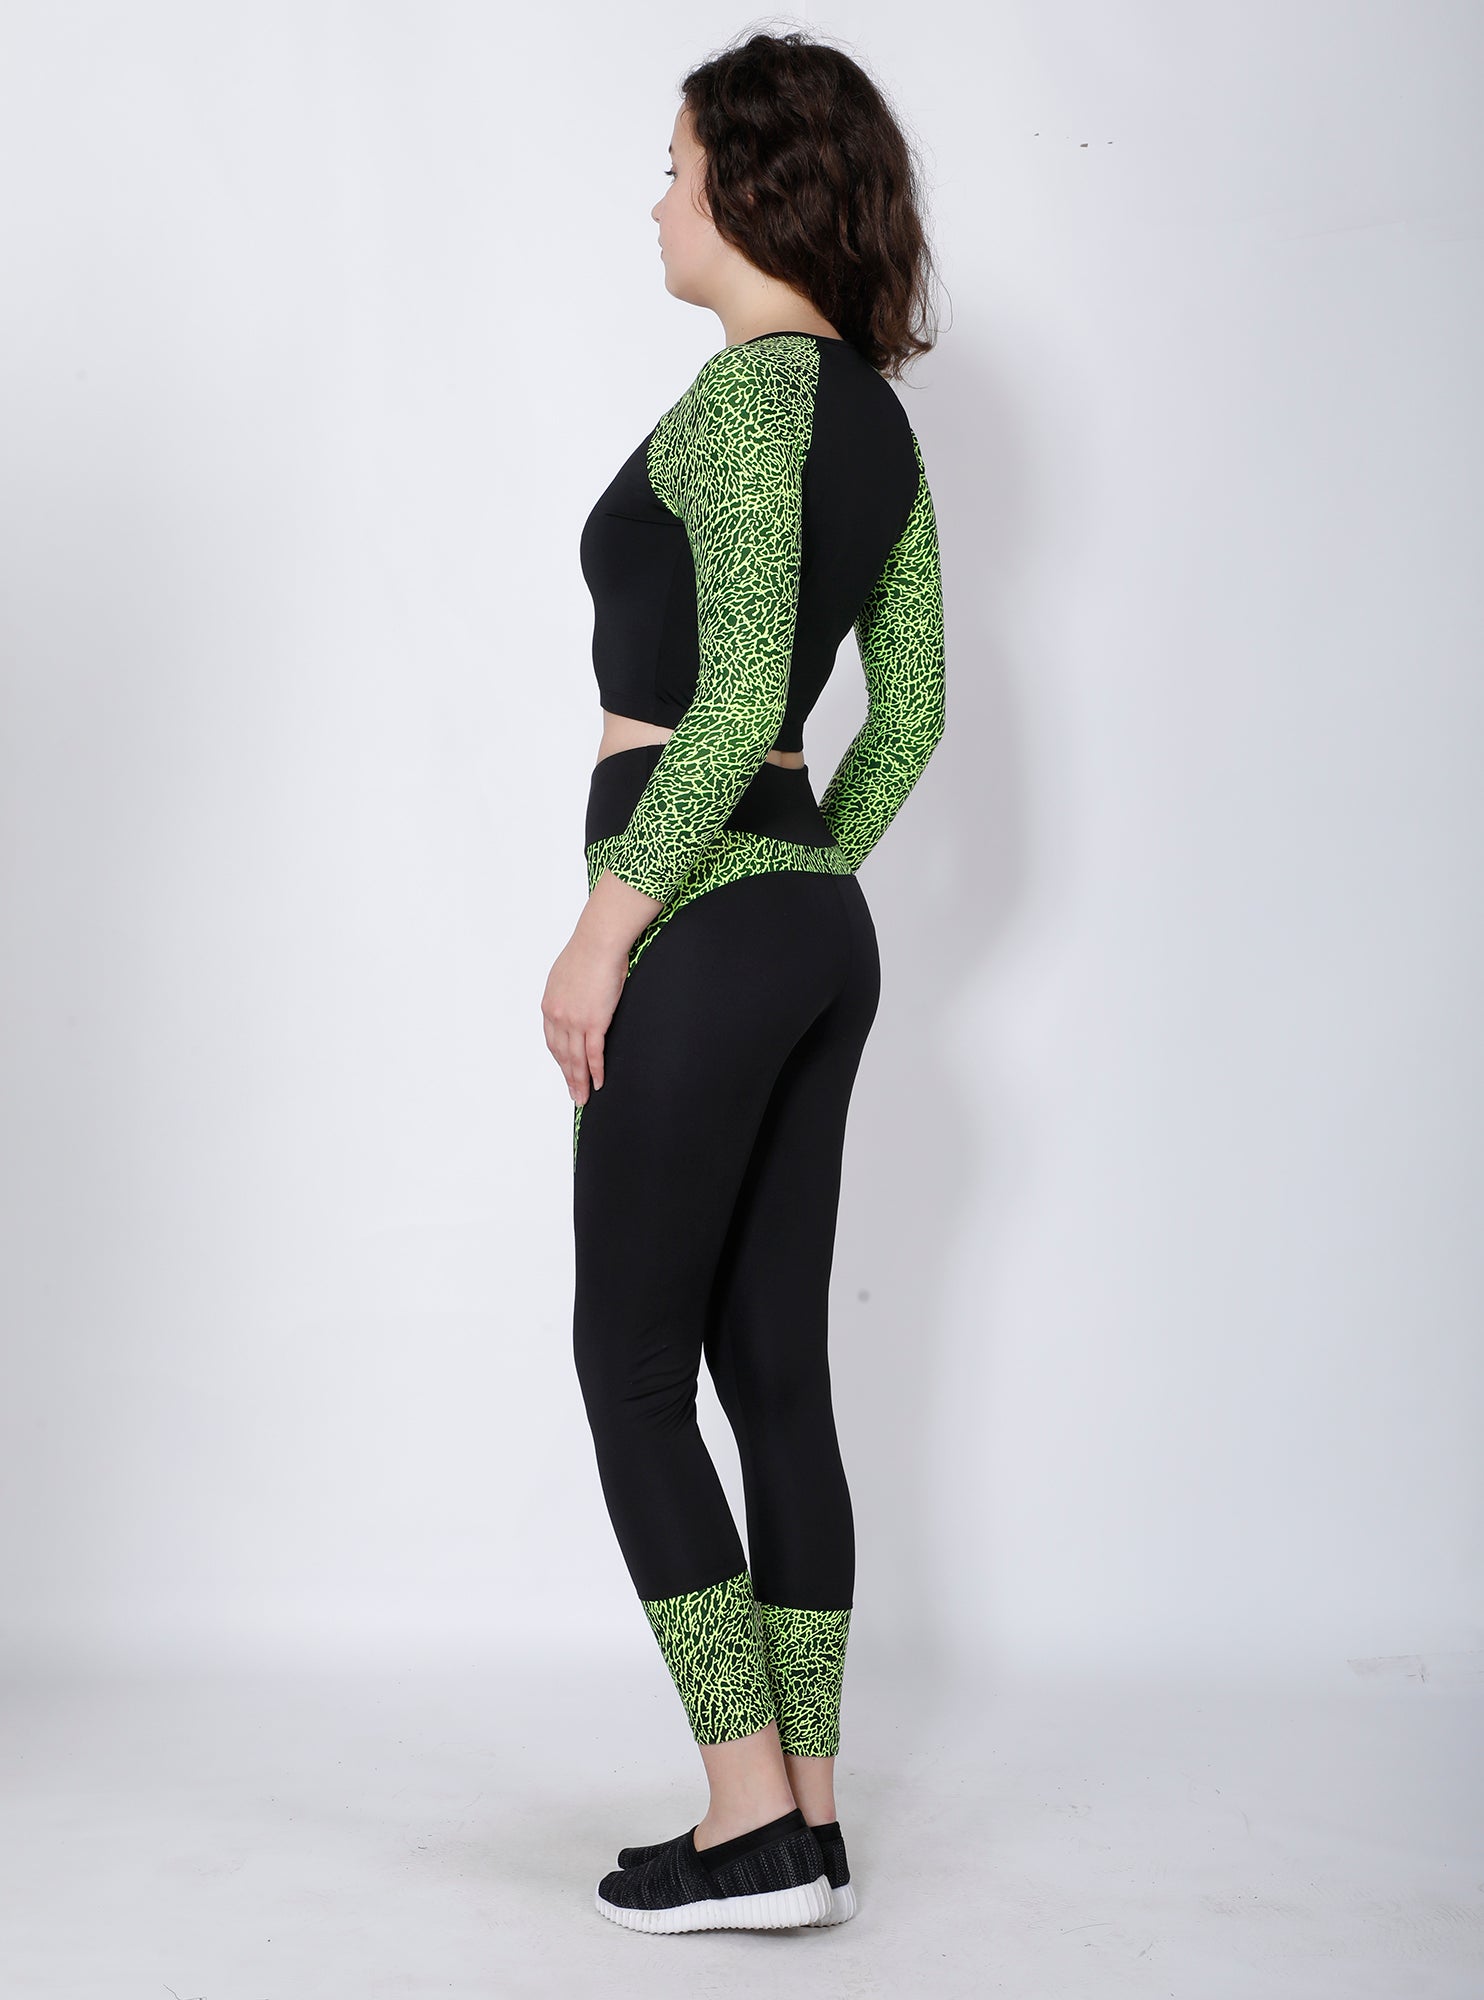 Shop The Look - Crop Zipper + Leggings - Black Neon - Yogue Activewear